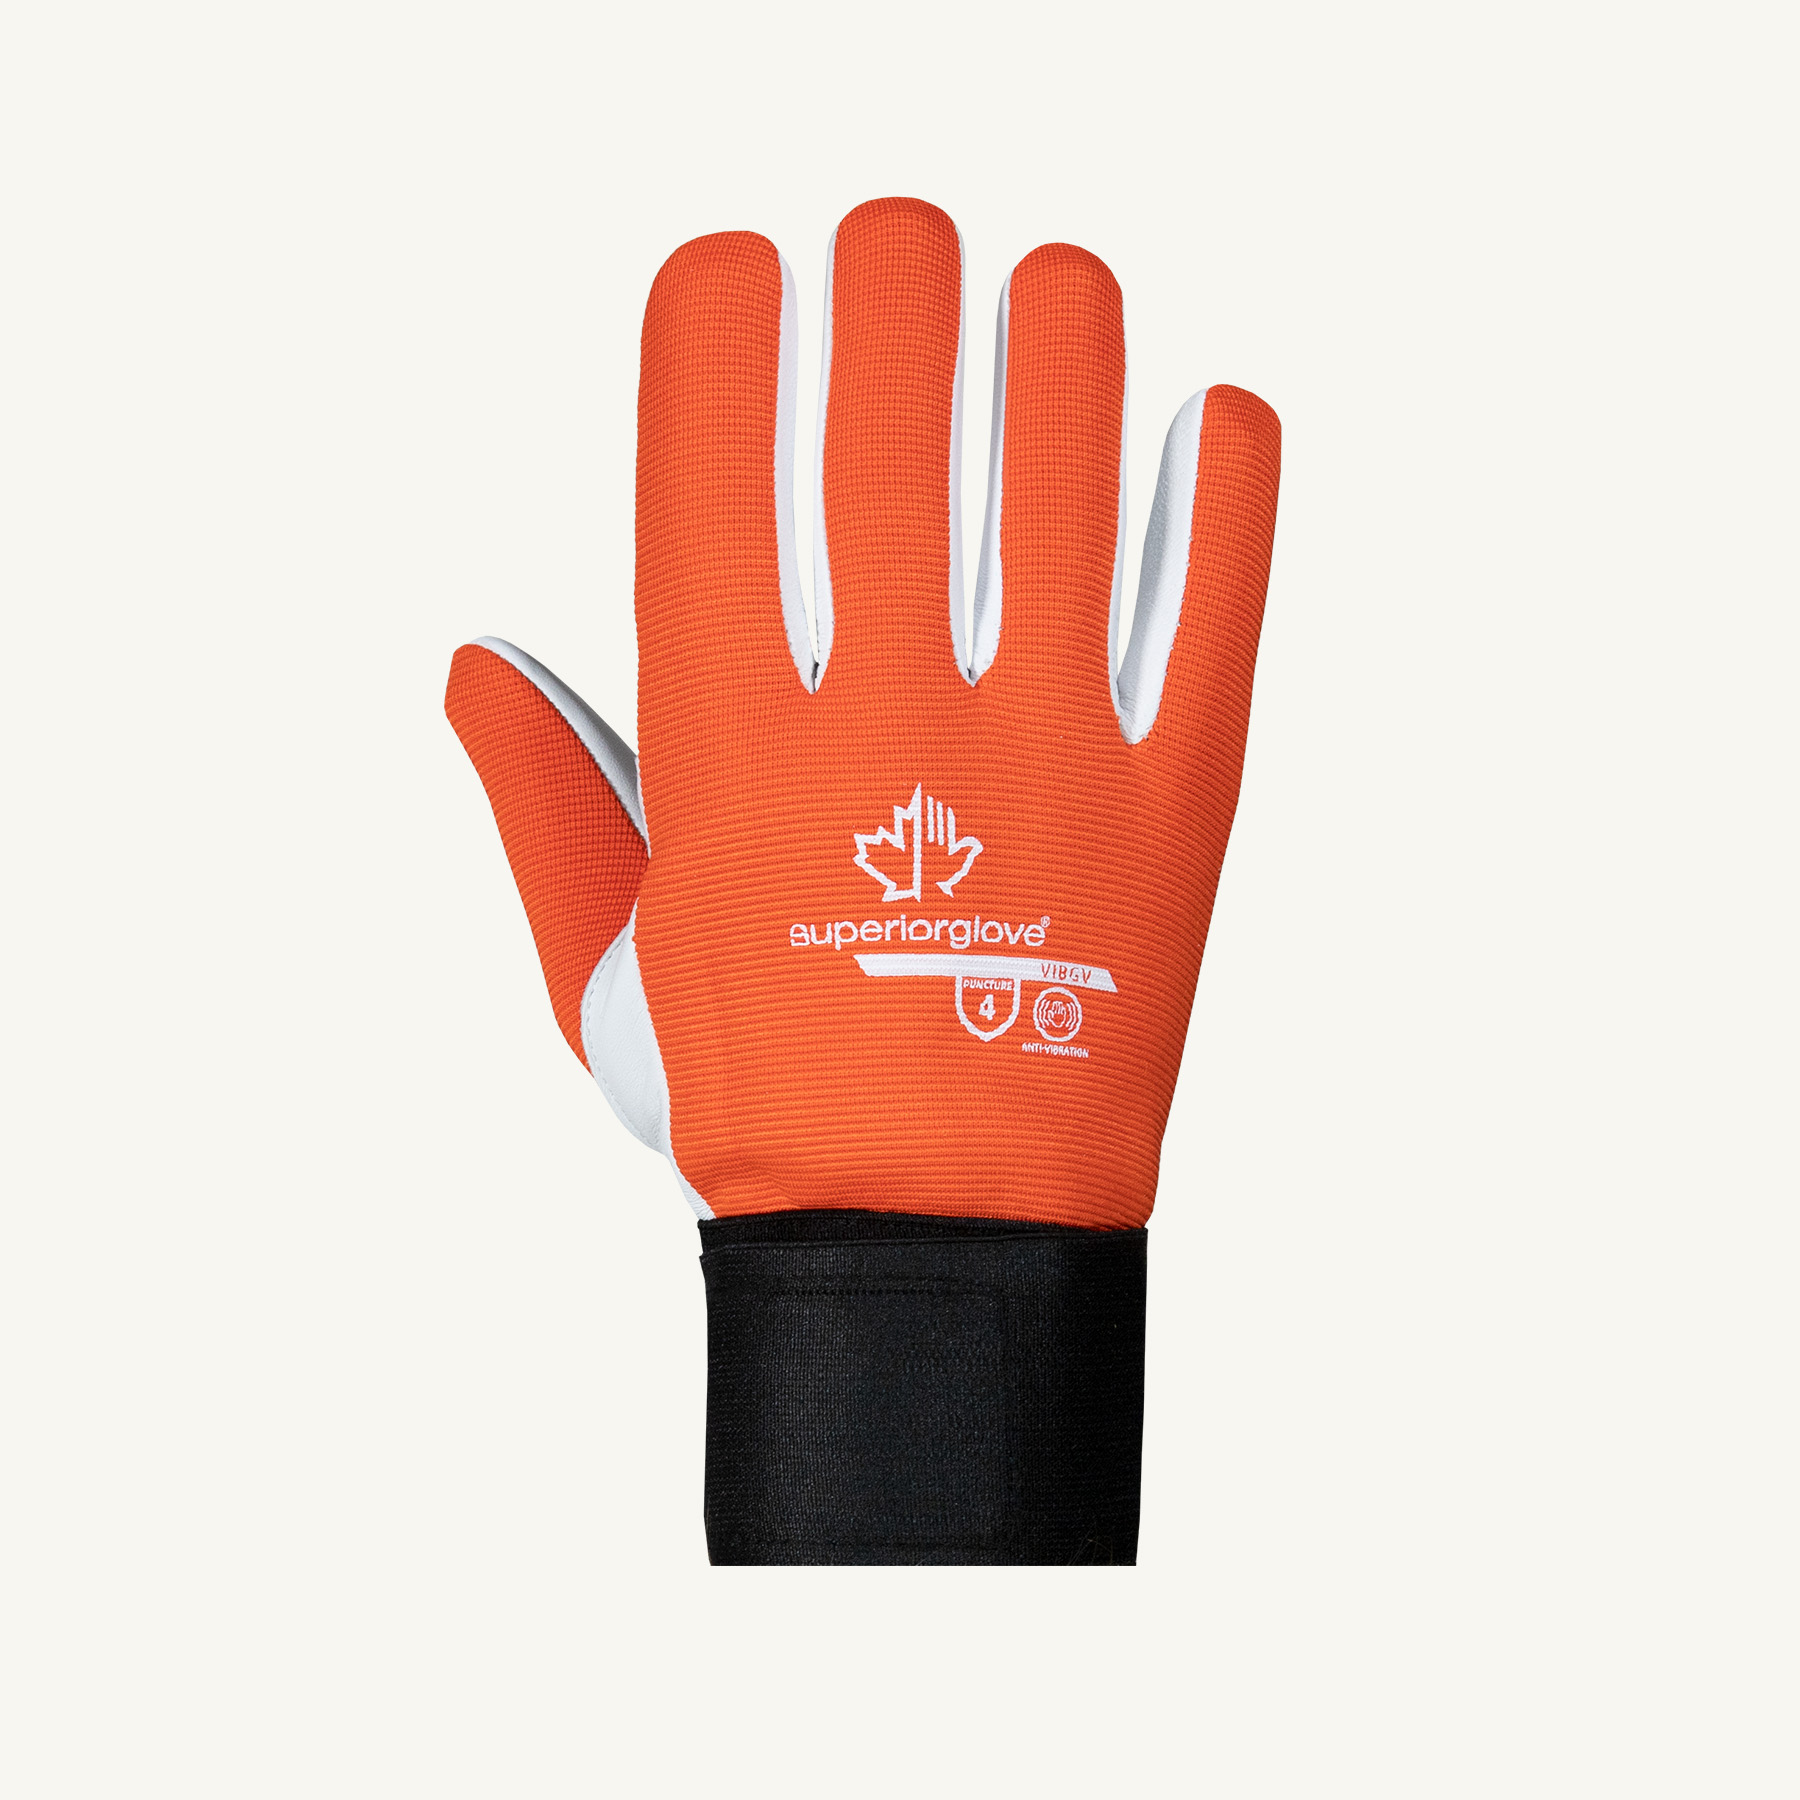 #VIBGV - Superior Glove® Goatskin Leather Palm Vibration-Dampening Work Gloves 